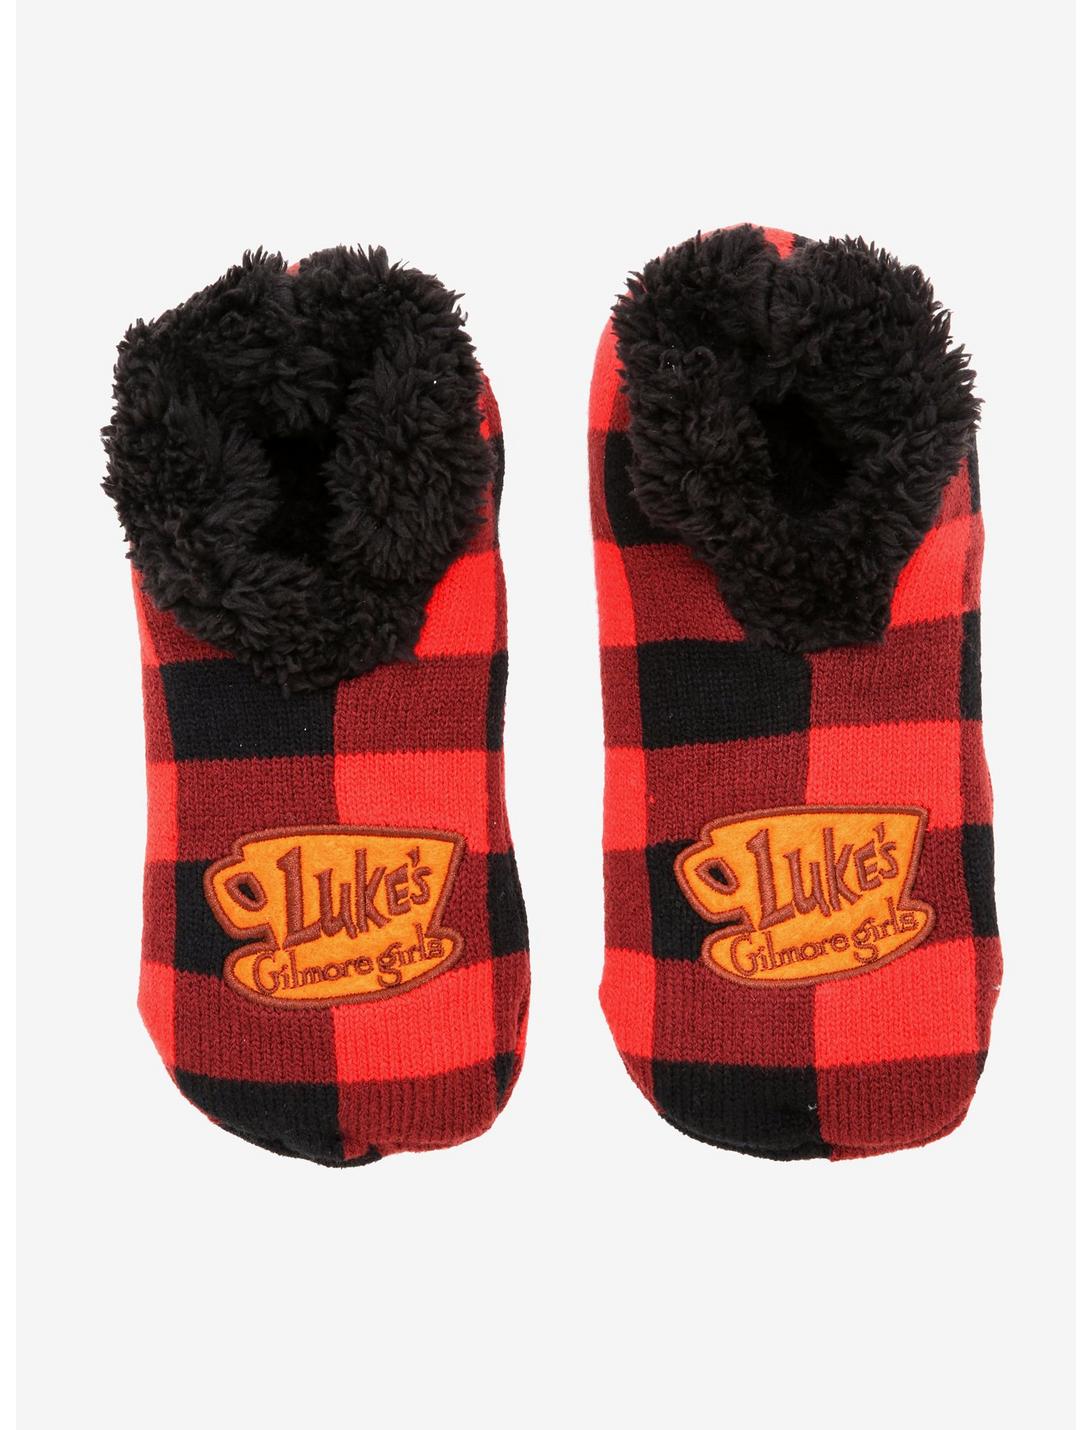 Gilmore Girls Luke's Diner Slipper Socks - BoxLunch Exclusive, , hi-res